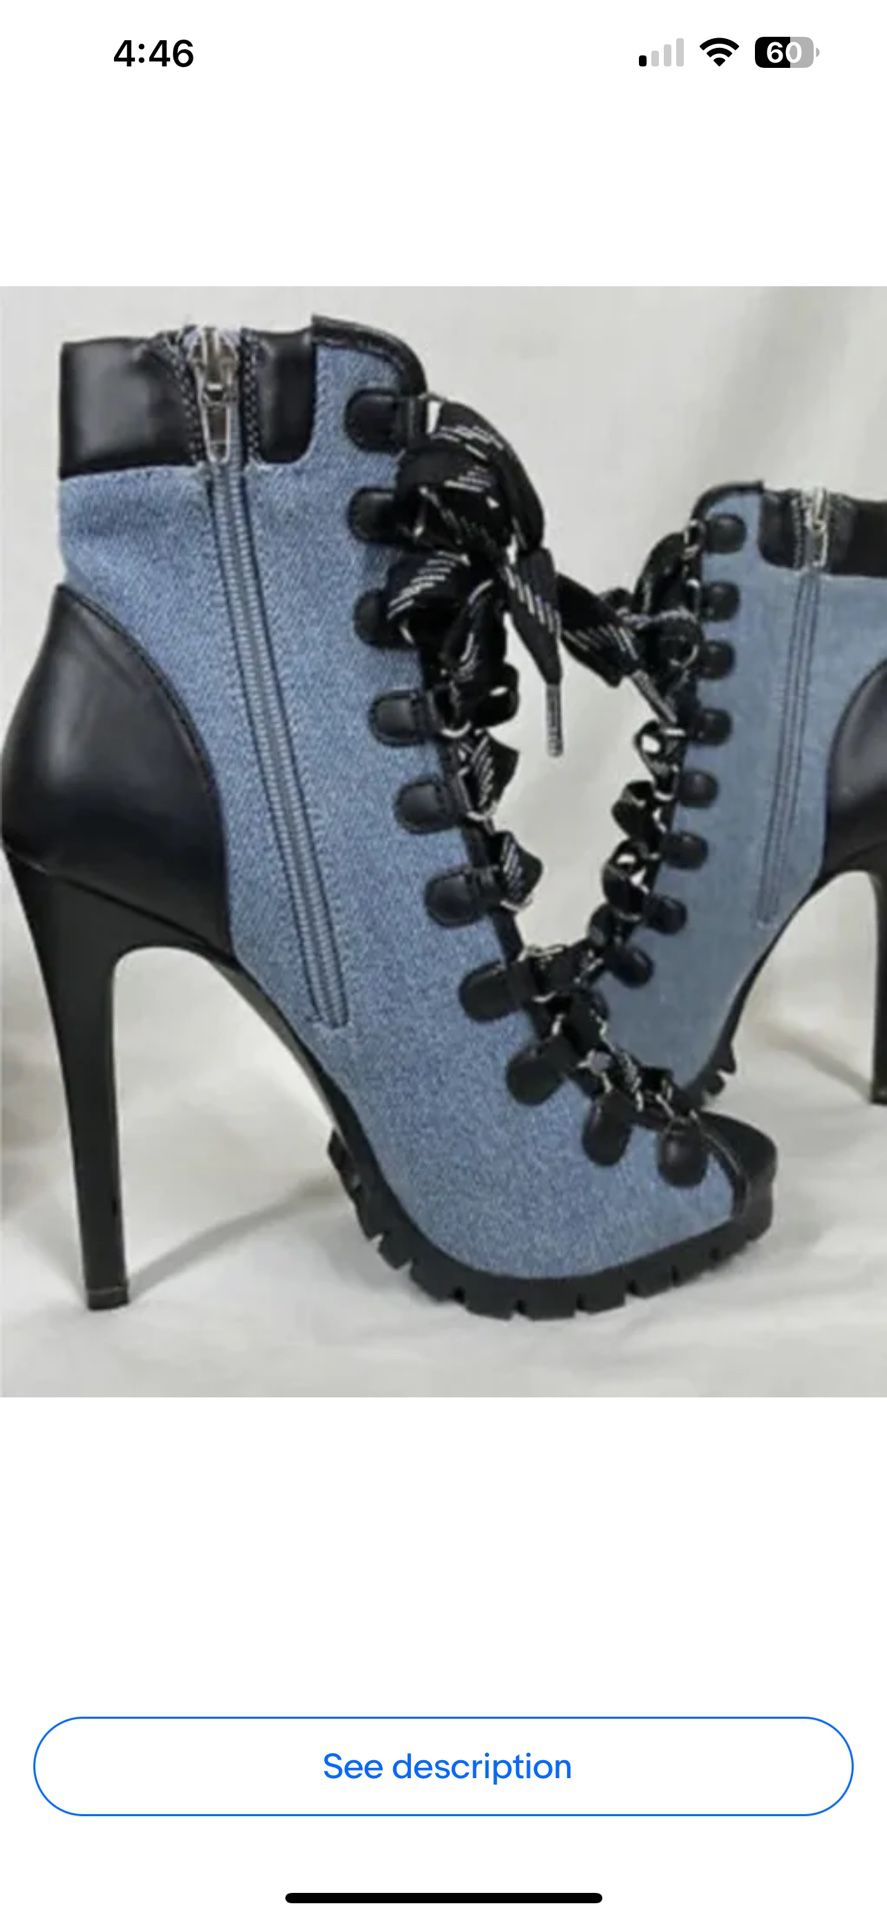 Steve Madden Fearless Fabric Peep Toe Mid-Calf Fashion Boots Black/Denim SIZE 6